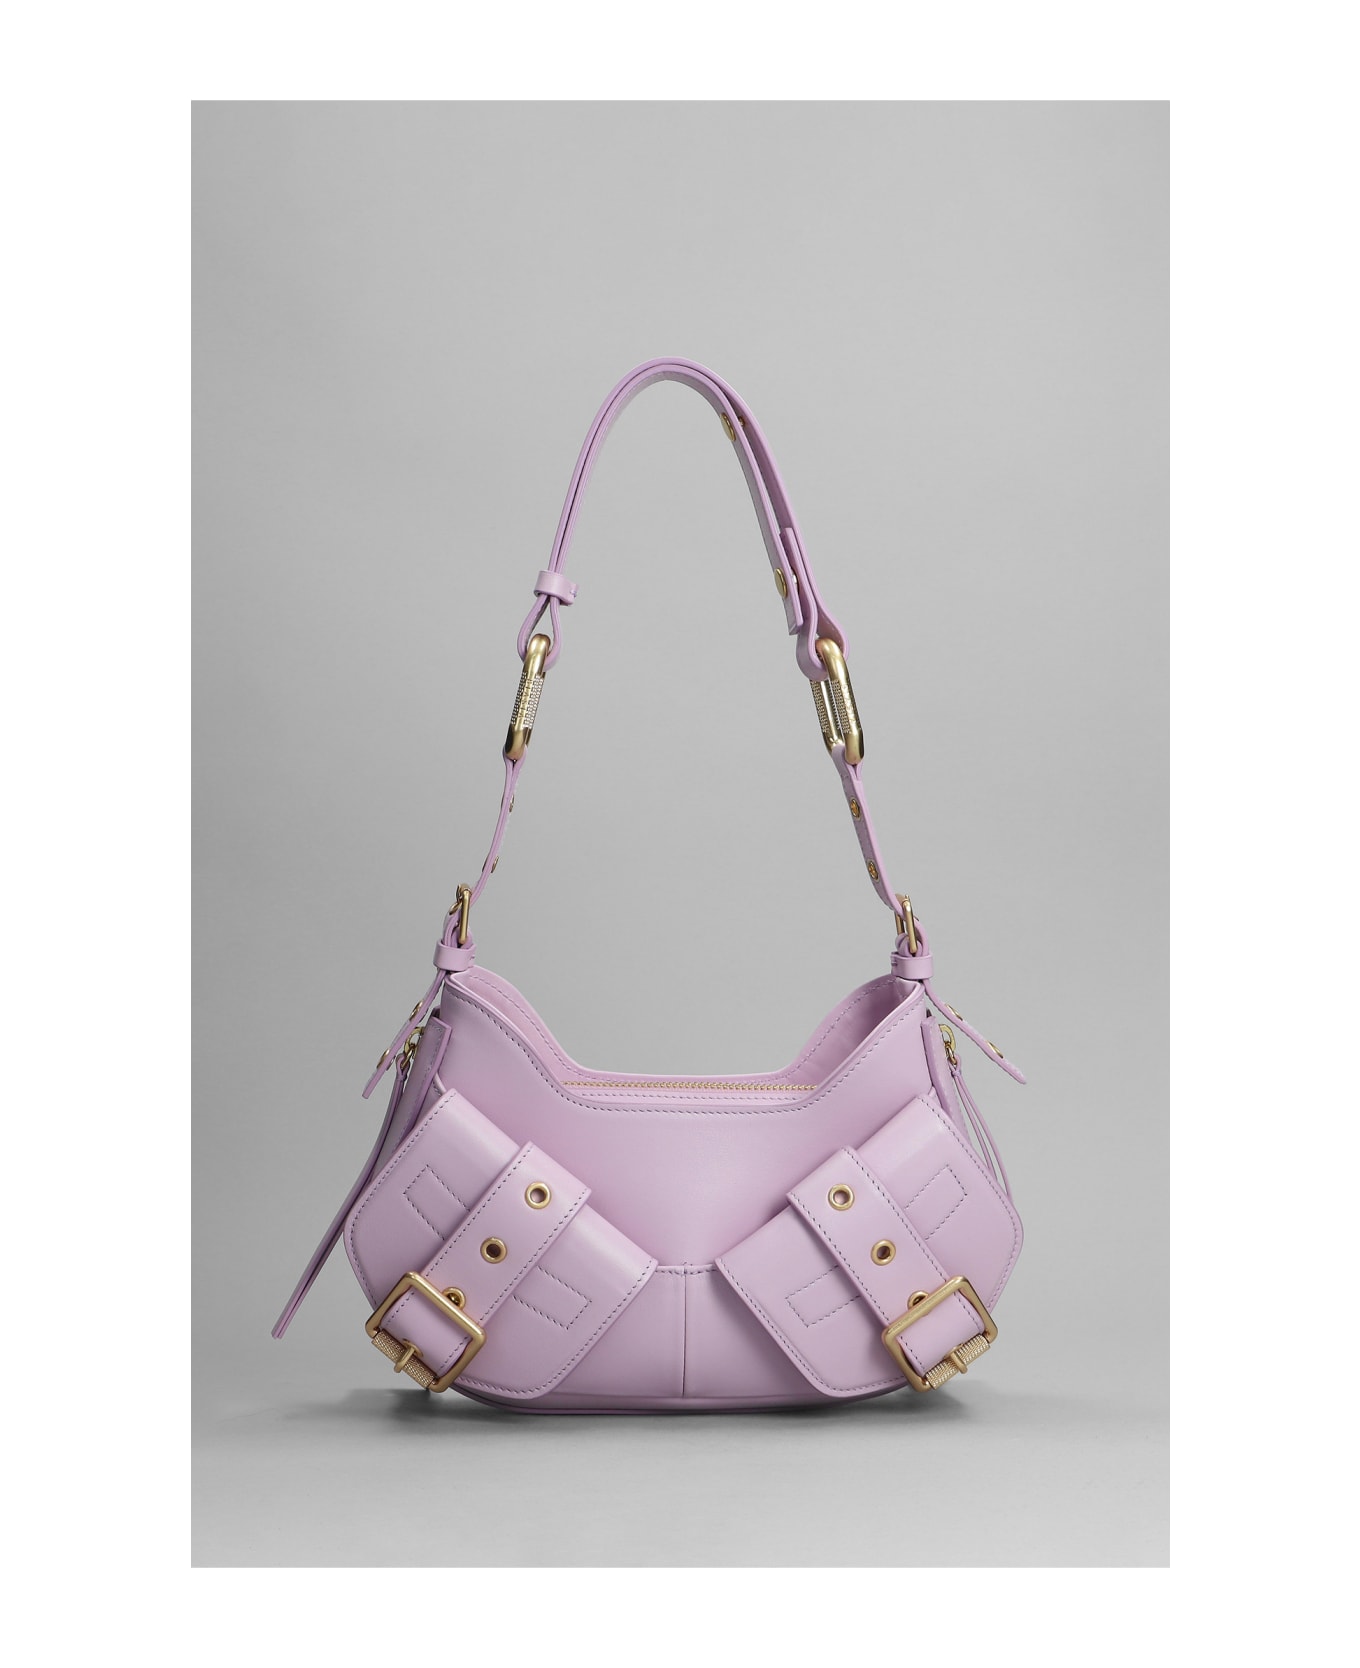 Biasia Shoulder Bag In Viola Leather - Viola